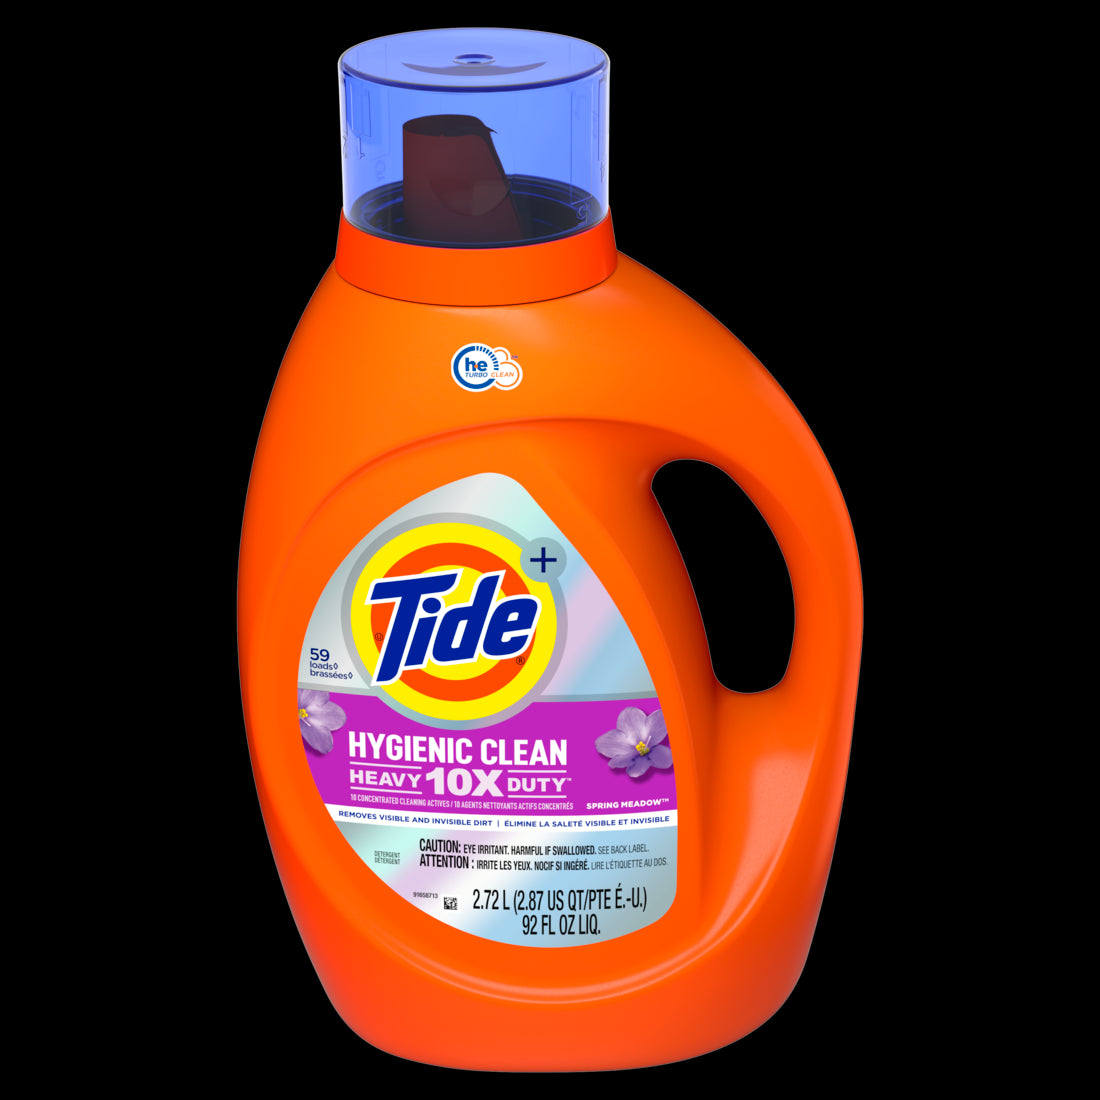 Tide Hygienic Clean Heavy 10x Duty Liquid Laundry Detergent Spring Meadow 59 Loads - 92oz/4pk